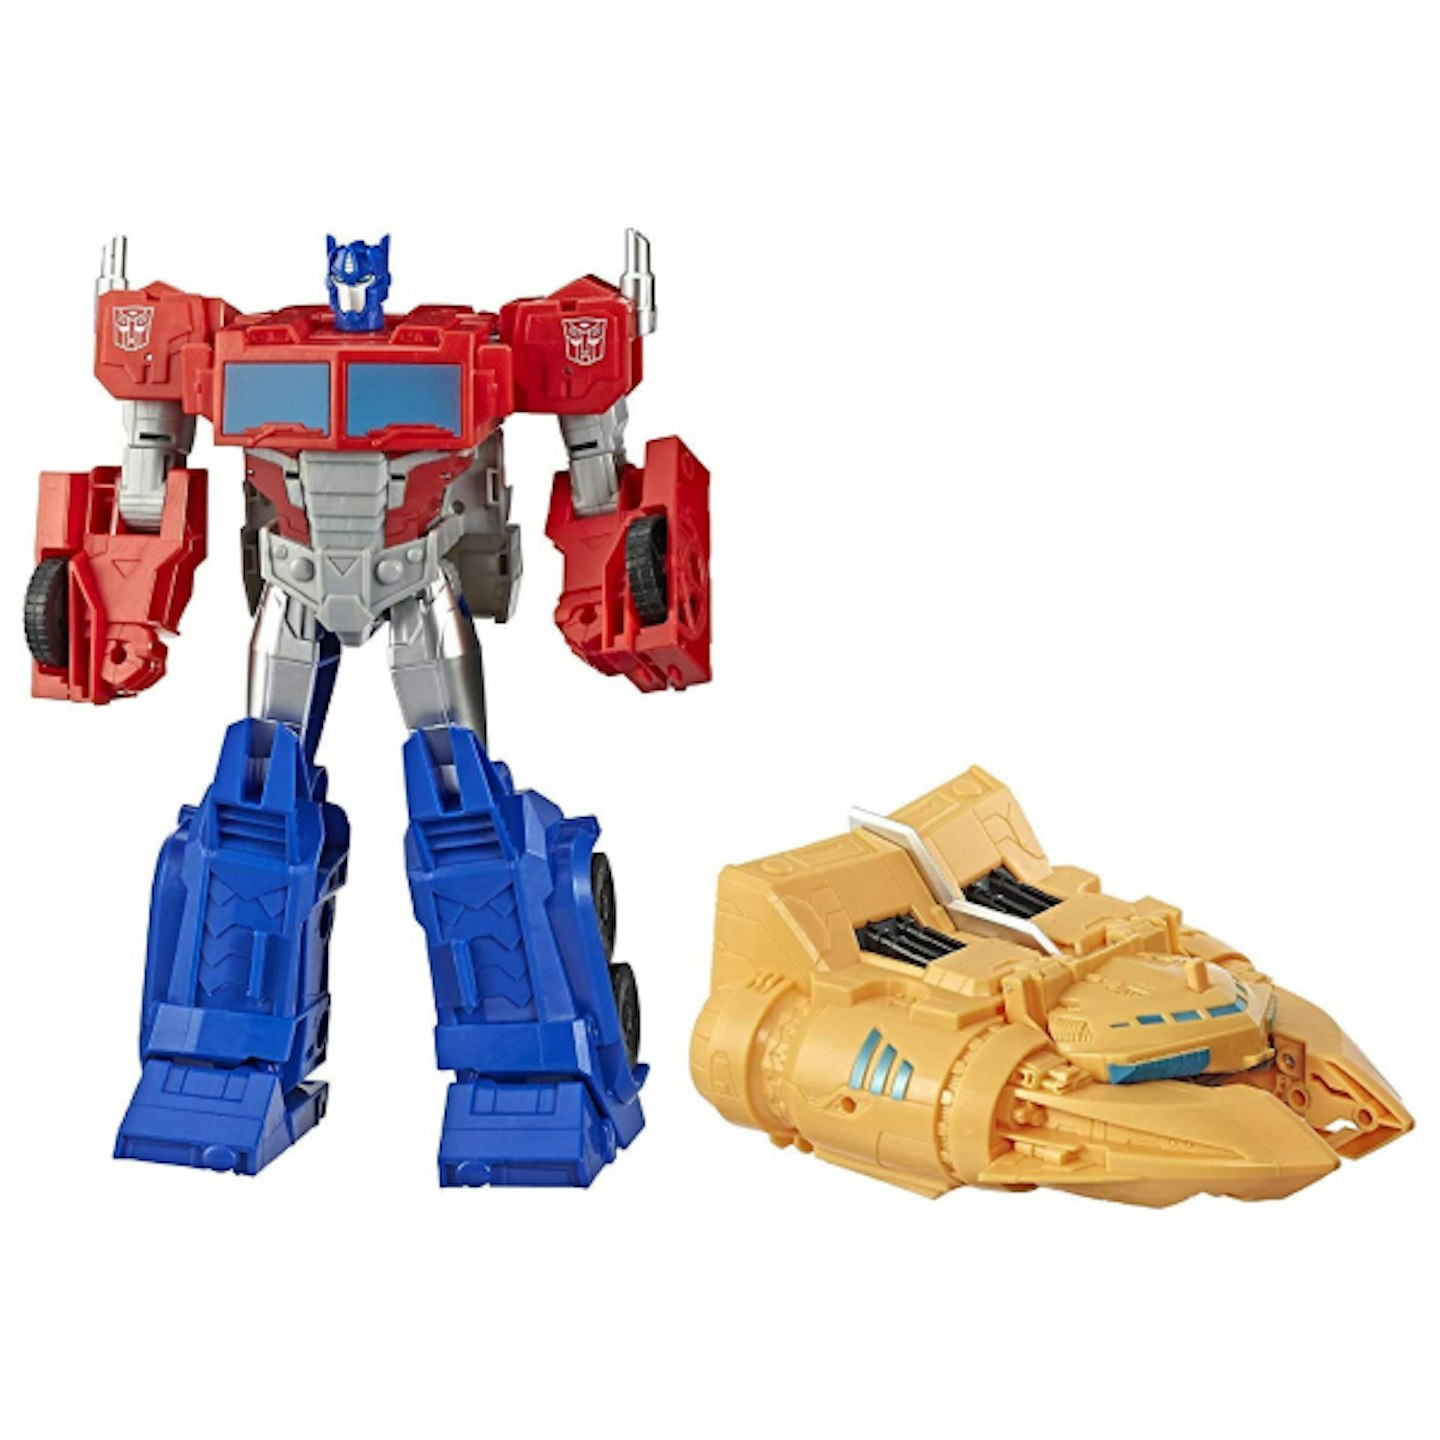 Optimus Prime Transformers figurine